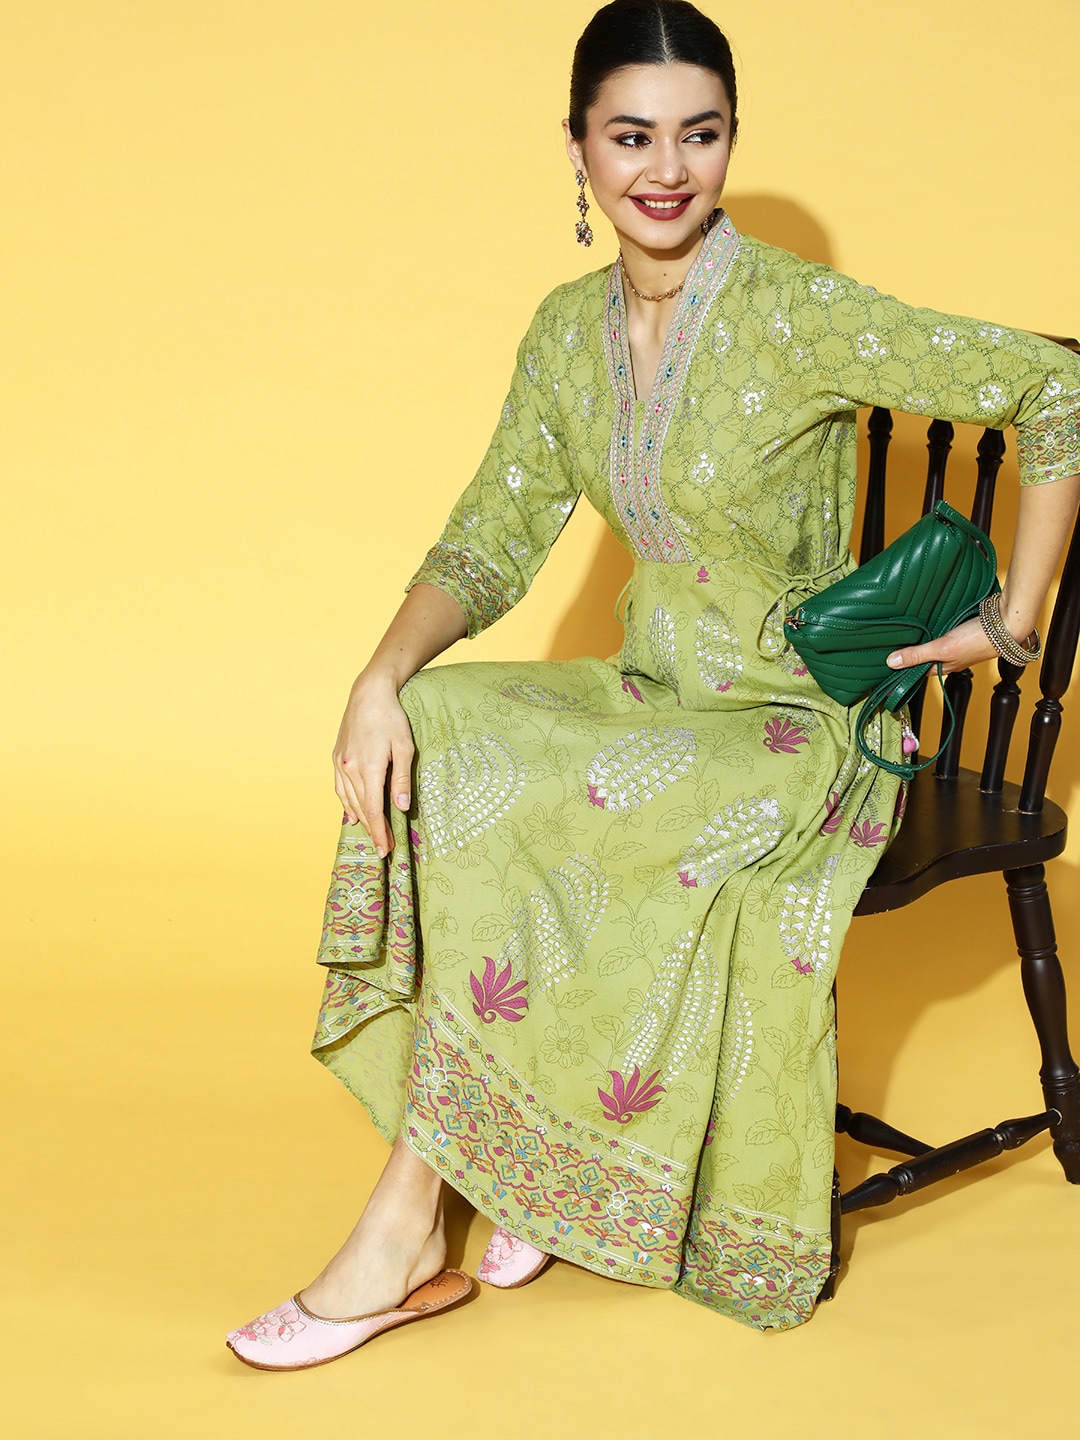 Juniper Women Gorgeous Green Ethnic Motifs Dress Price in India